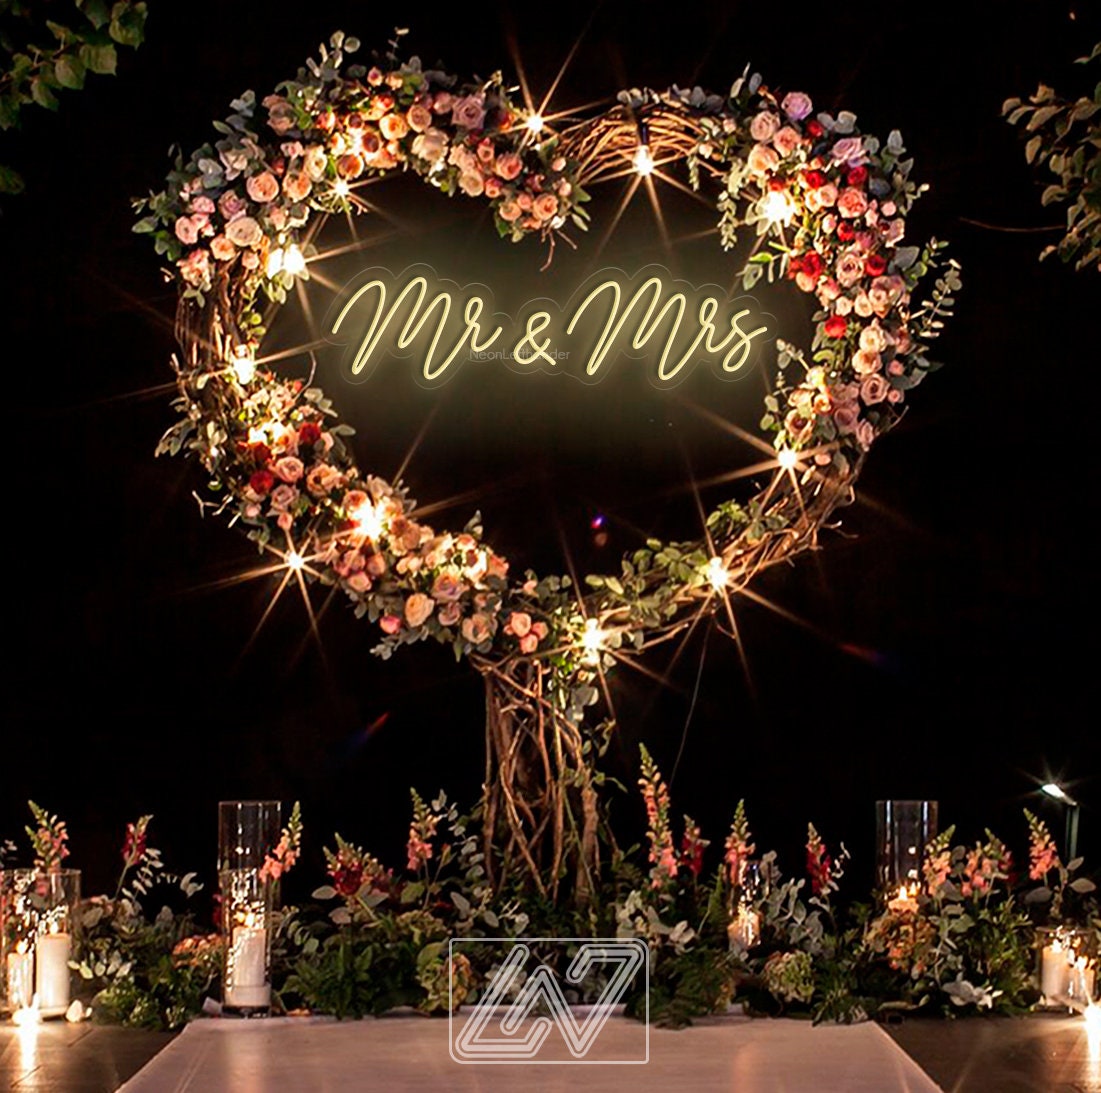 Mr. & Mrs. - Wedding Custom Neon Sign Flex Led Neon Light Sign Bride Engagement Party Custom Neon Sign Room Decoration